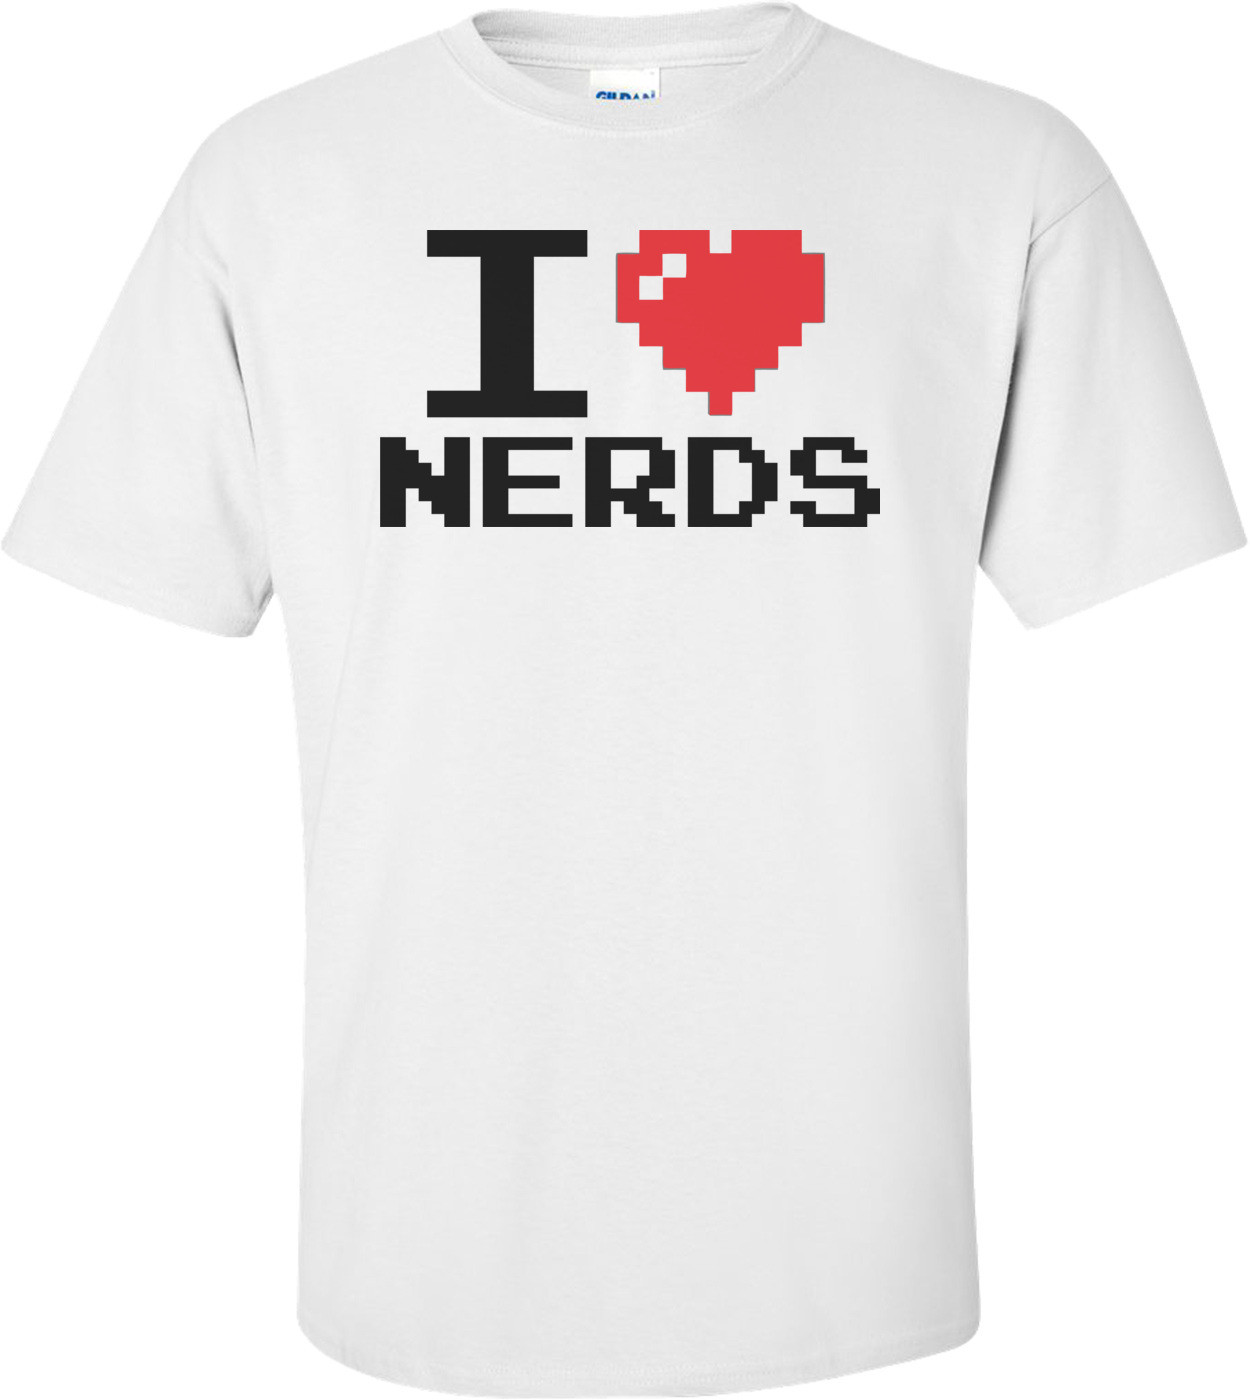 I Love Nerds Shirt